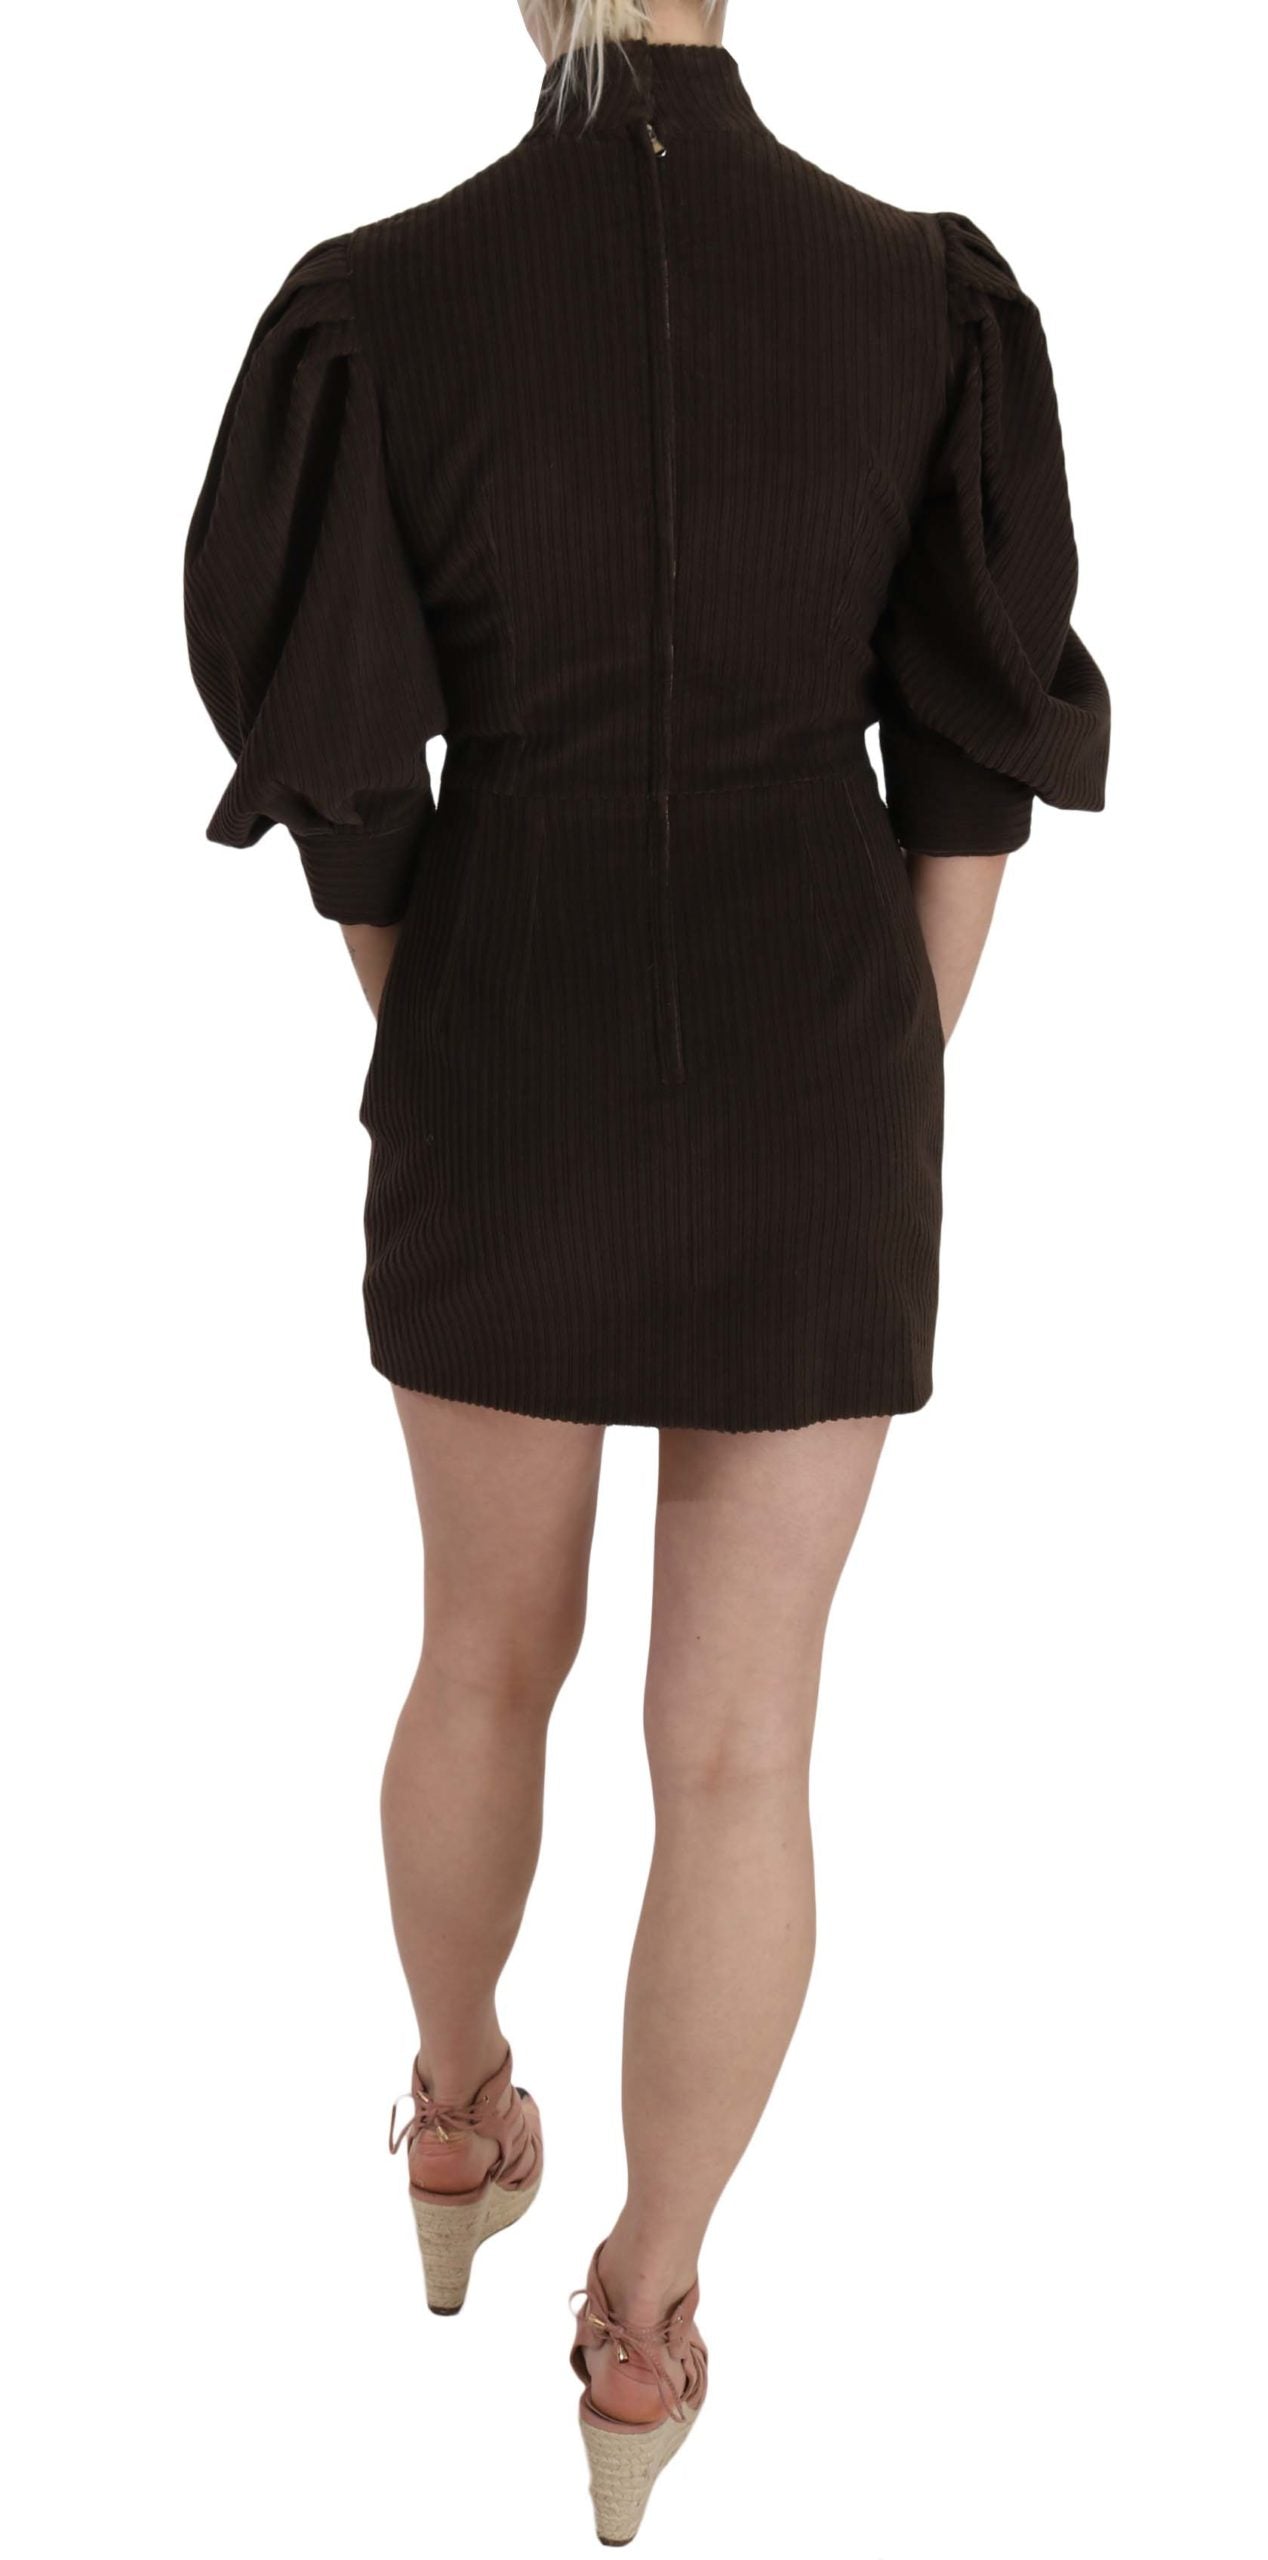 Dolce & Gabbana Chic Brown Corduroy Bodycon Mini Dress